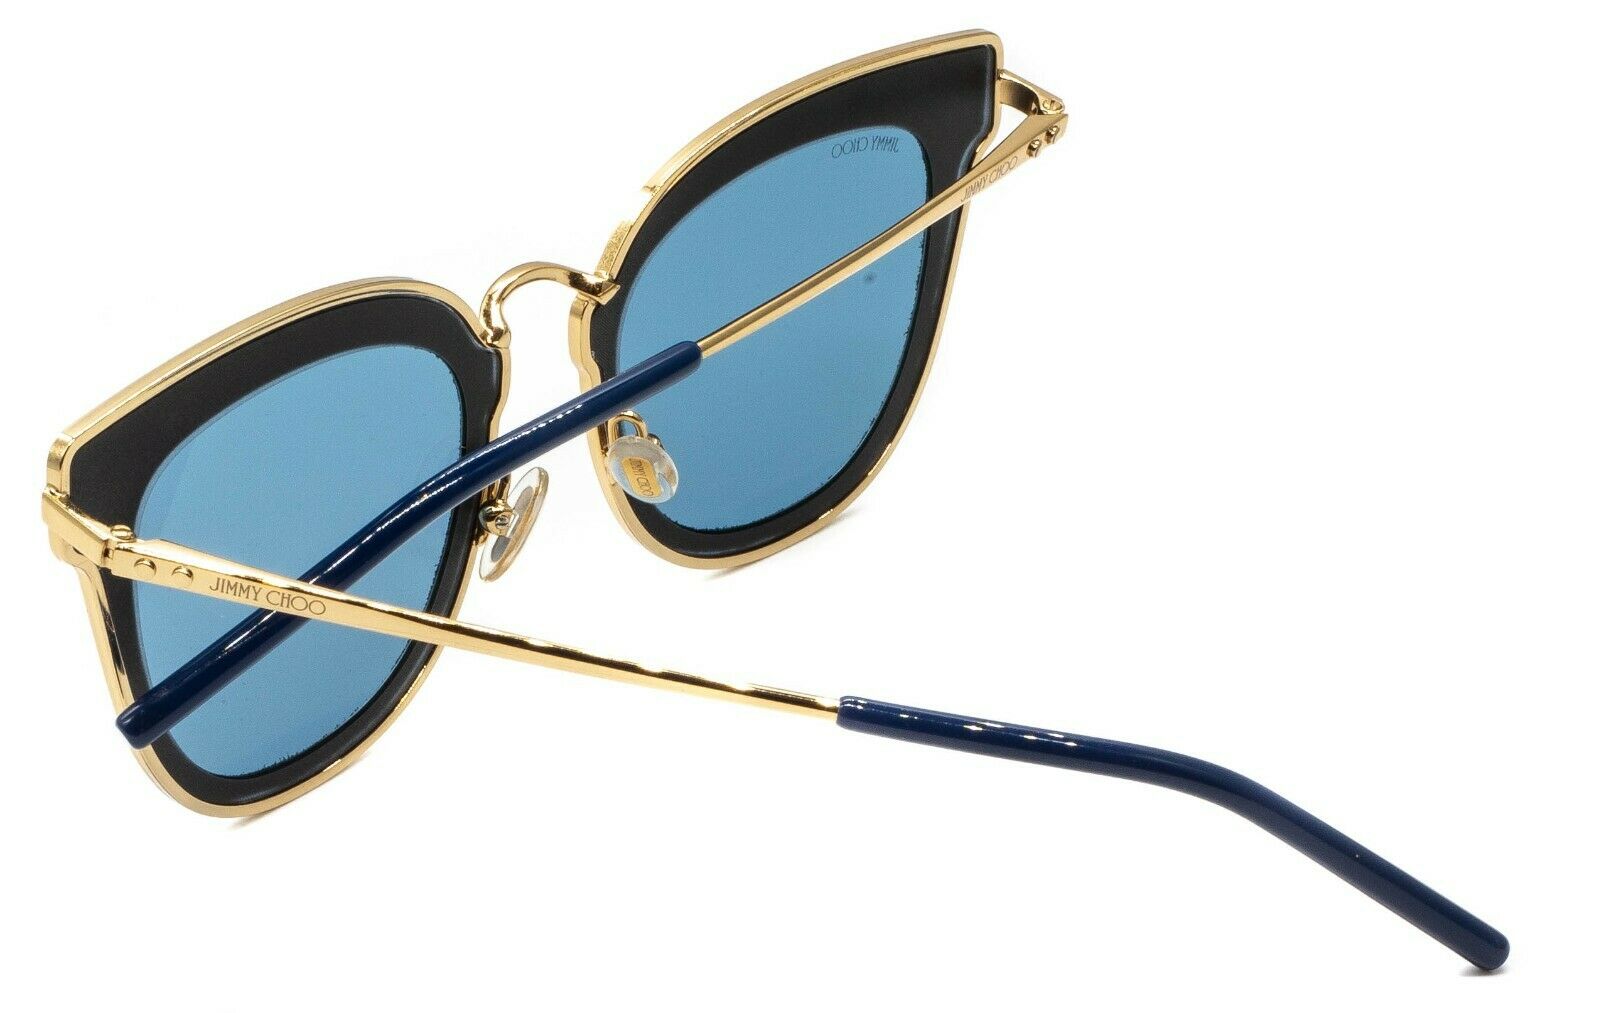 JIMMY CHOO NILE/S LKSA9 63mm Sunglasses Shades Frames Eyewear New BNIB - ITALY